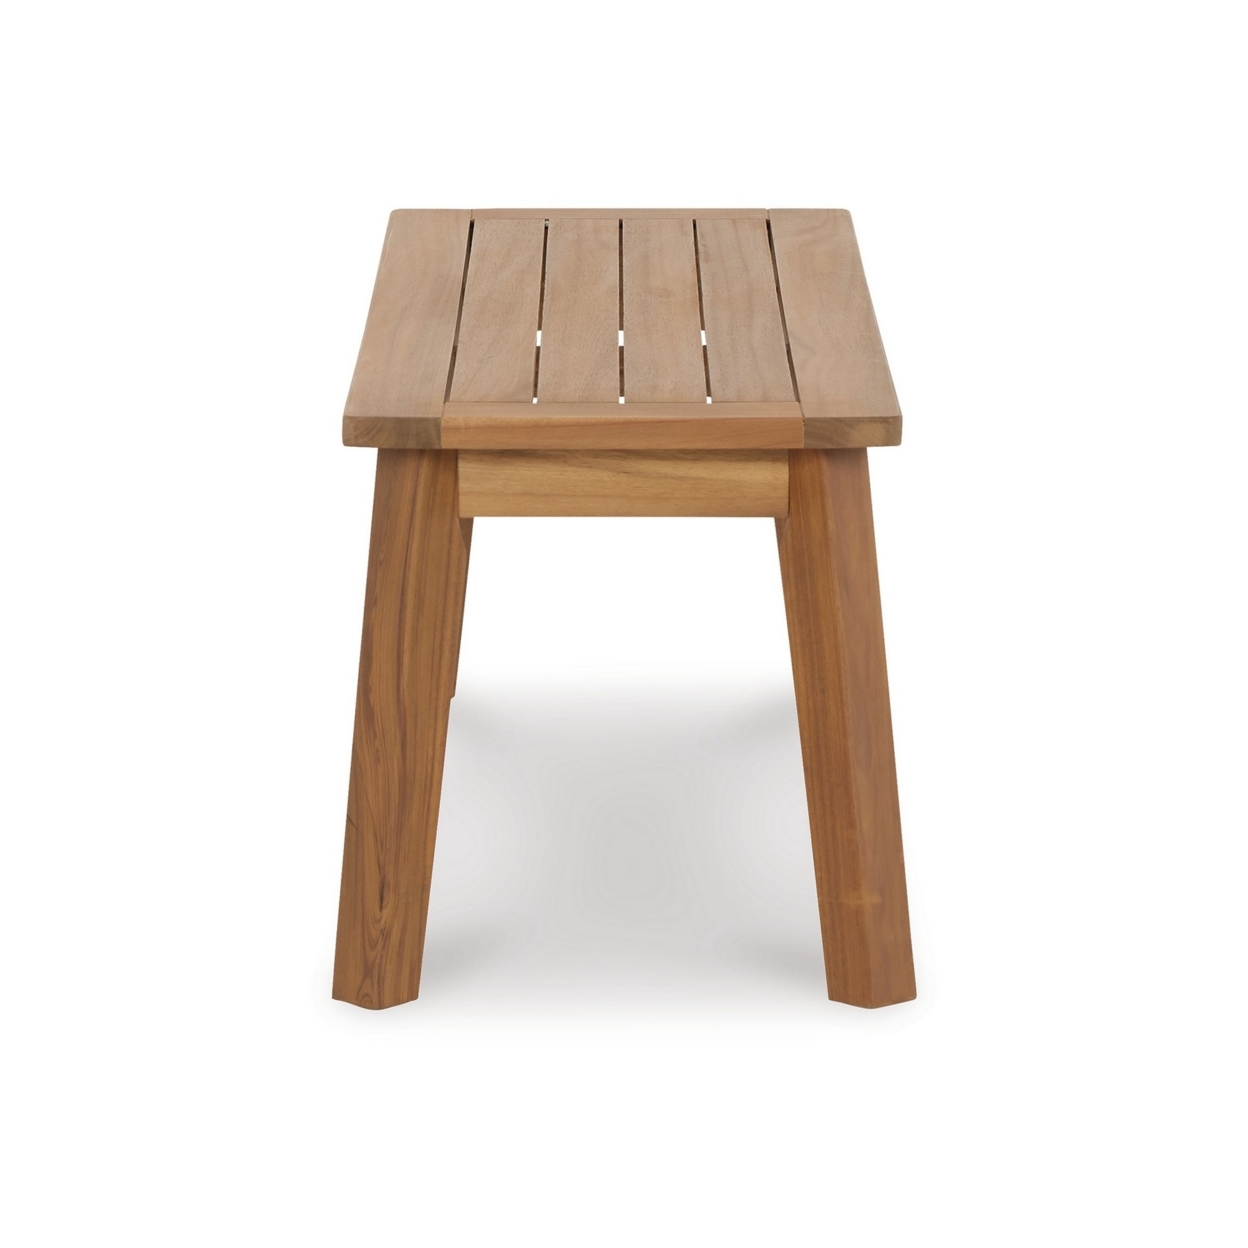 47 Inch Rectangular Bench, Natural Acacia Wood, Slatted Seat, Angled Legs- Saltoro Sherpi